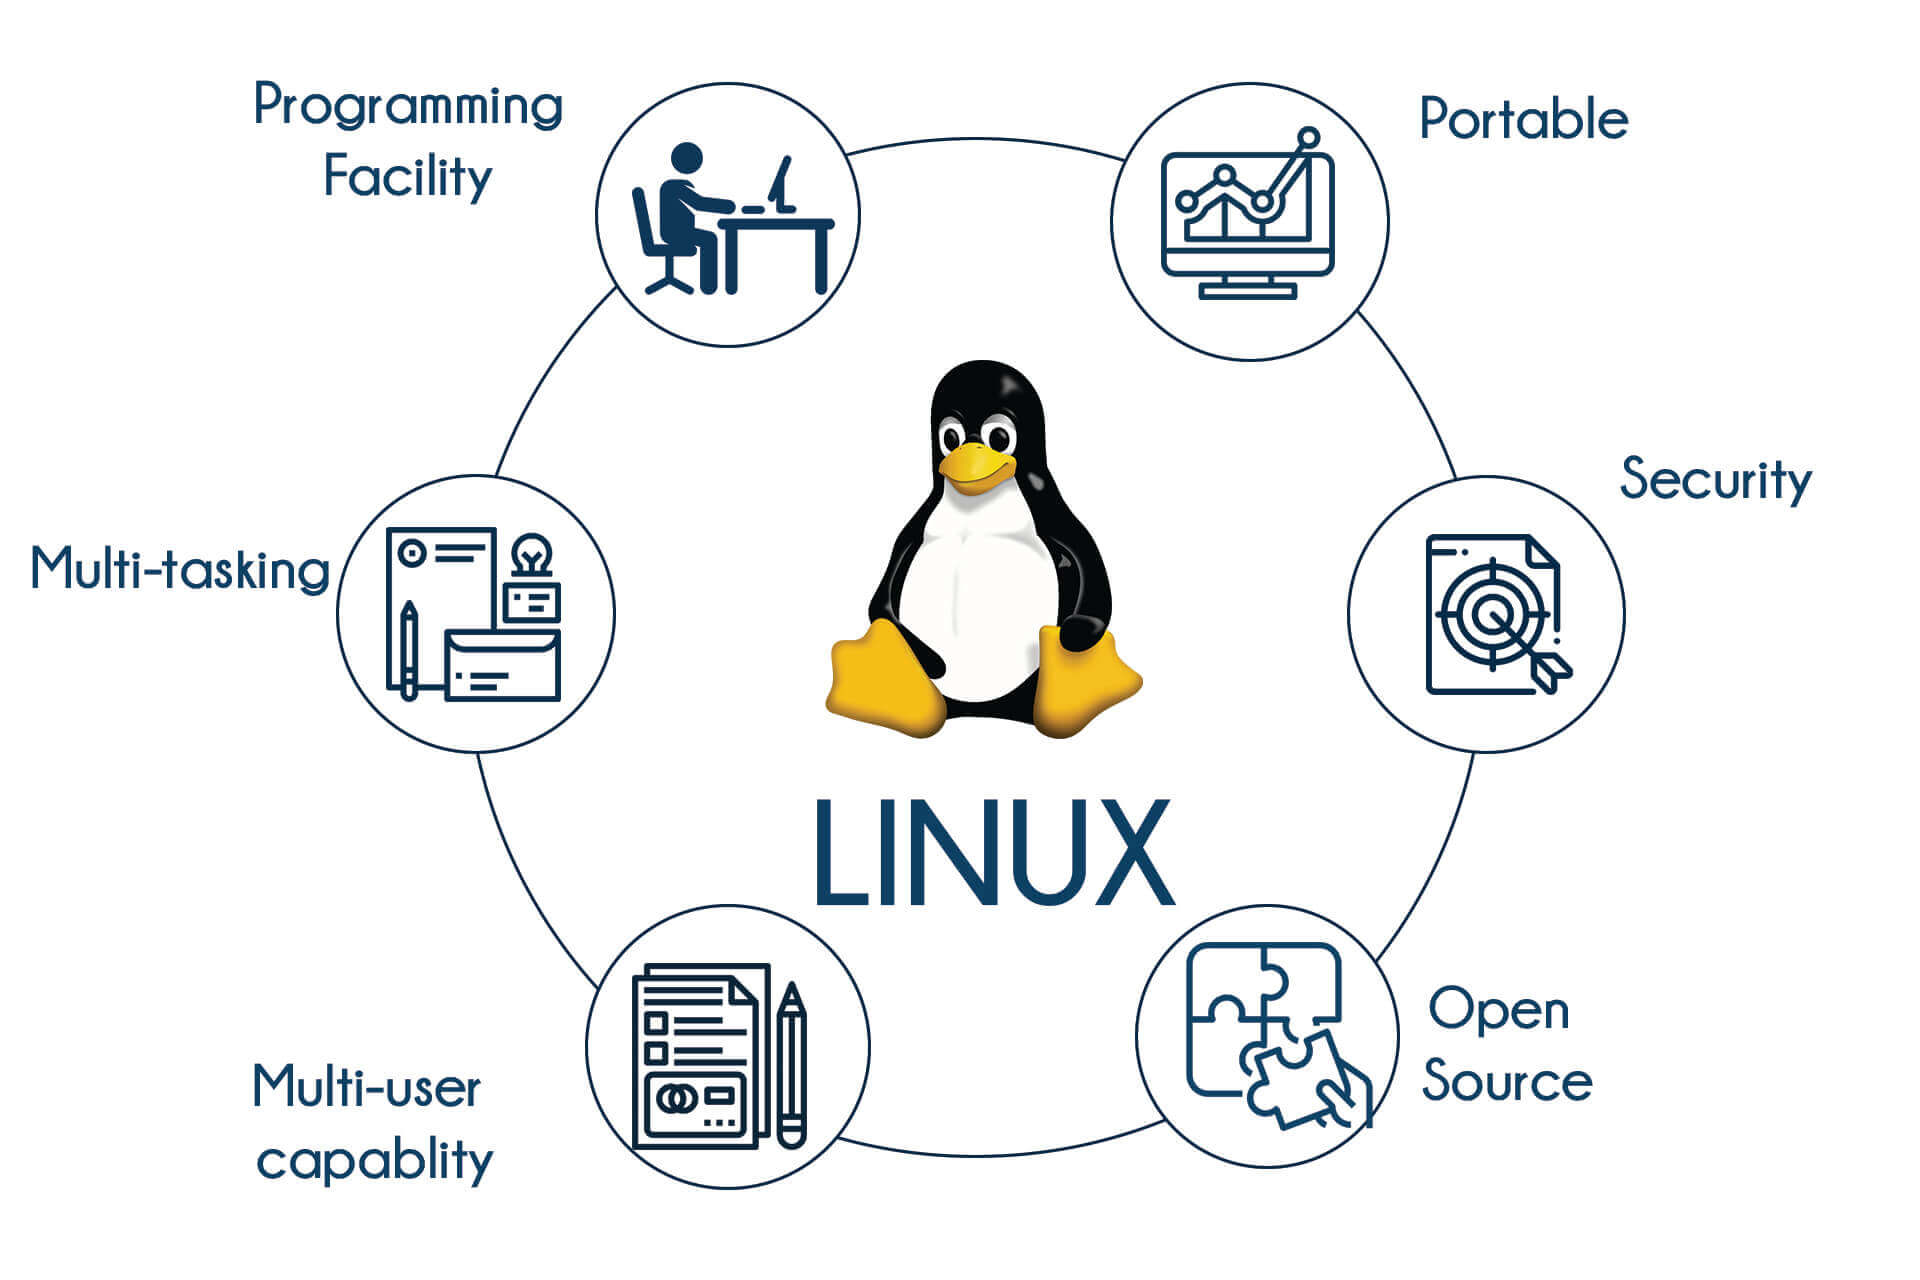 Linux Training in Bangalore